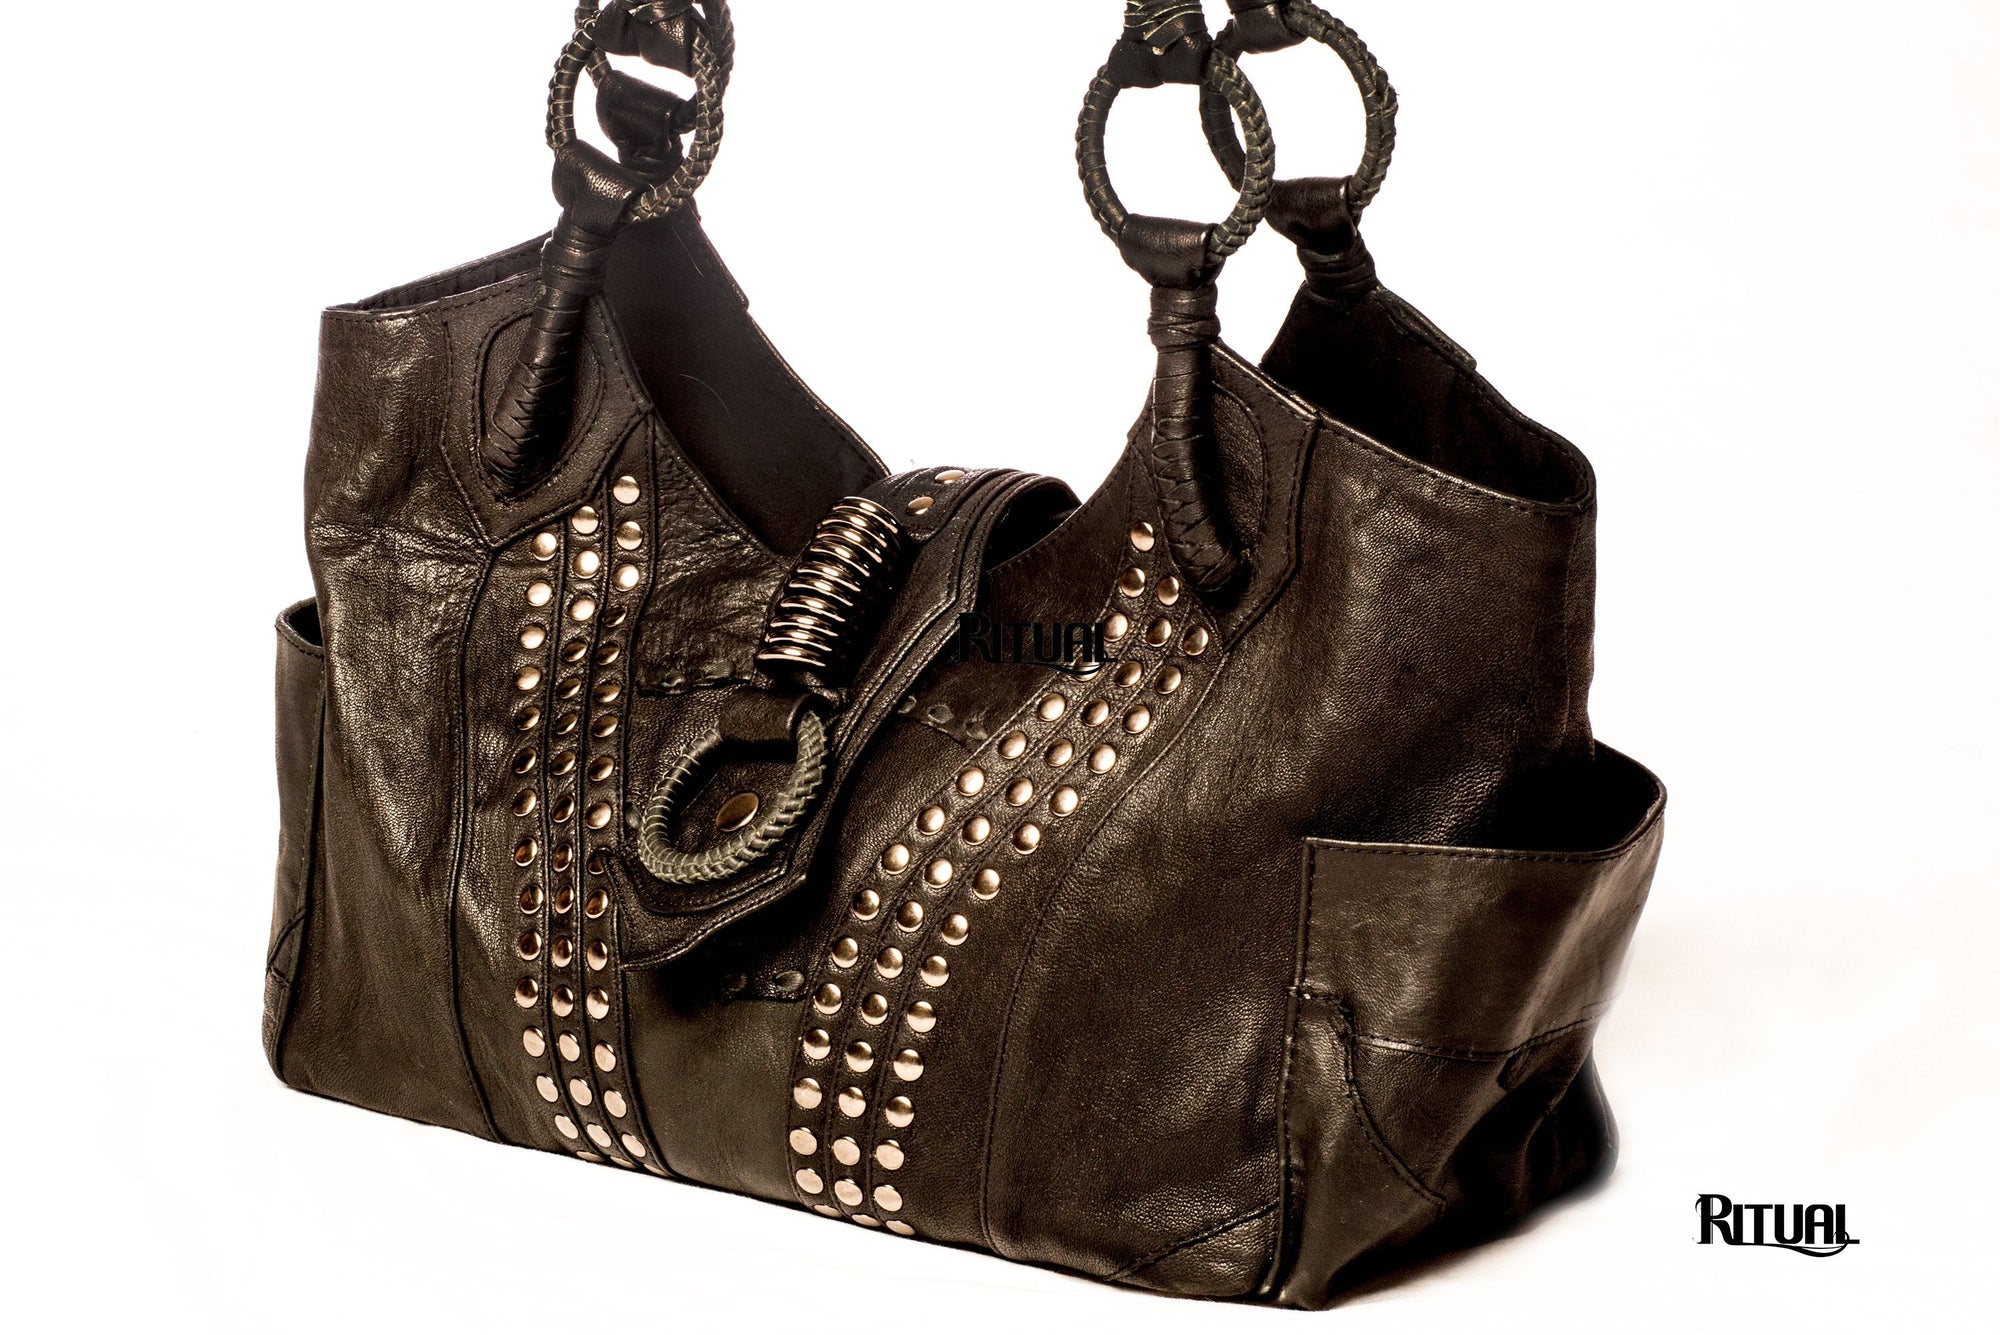 The Spellbound Handbag